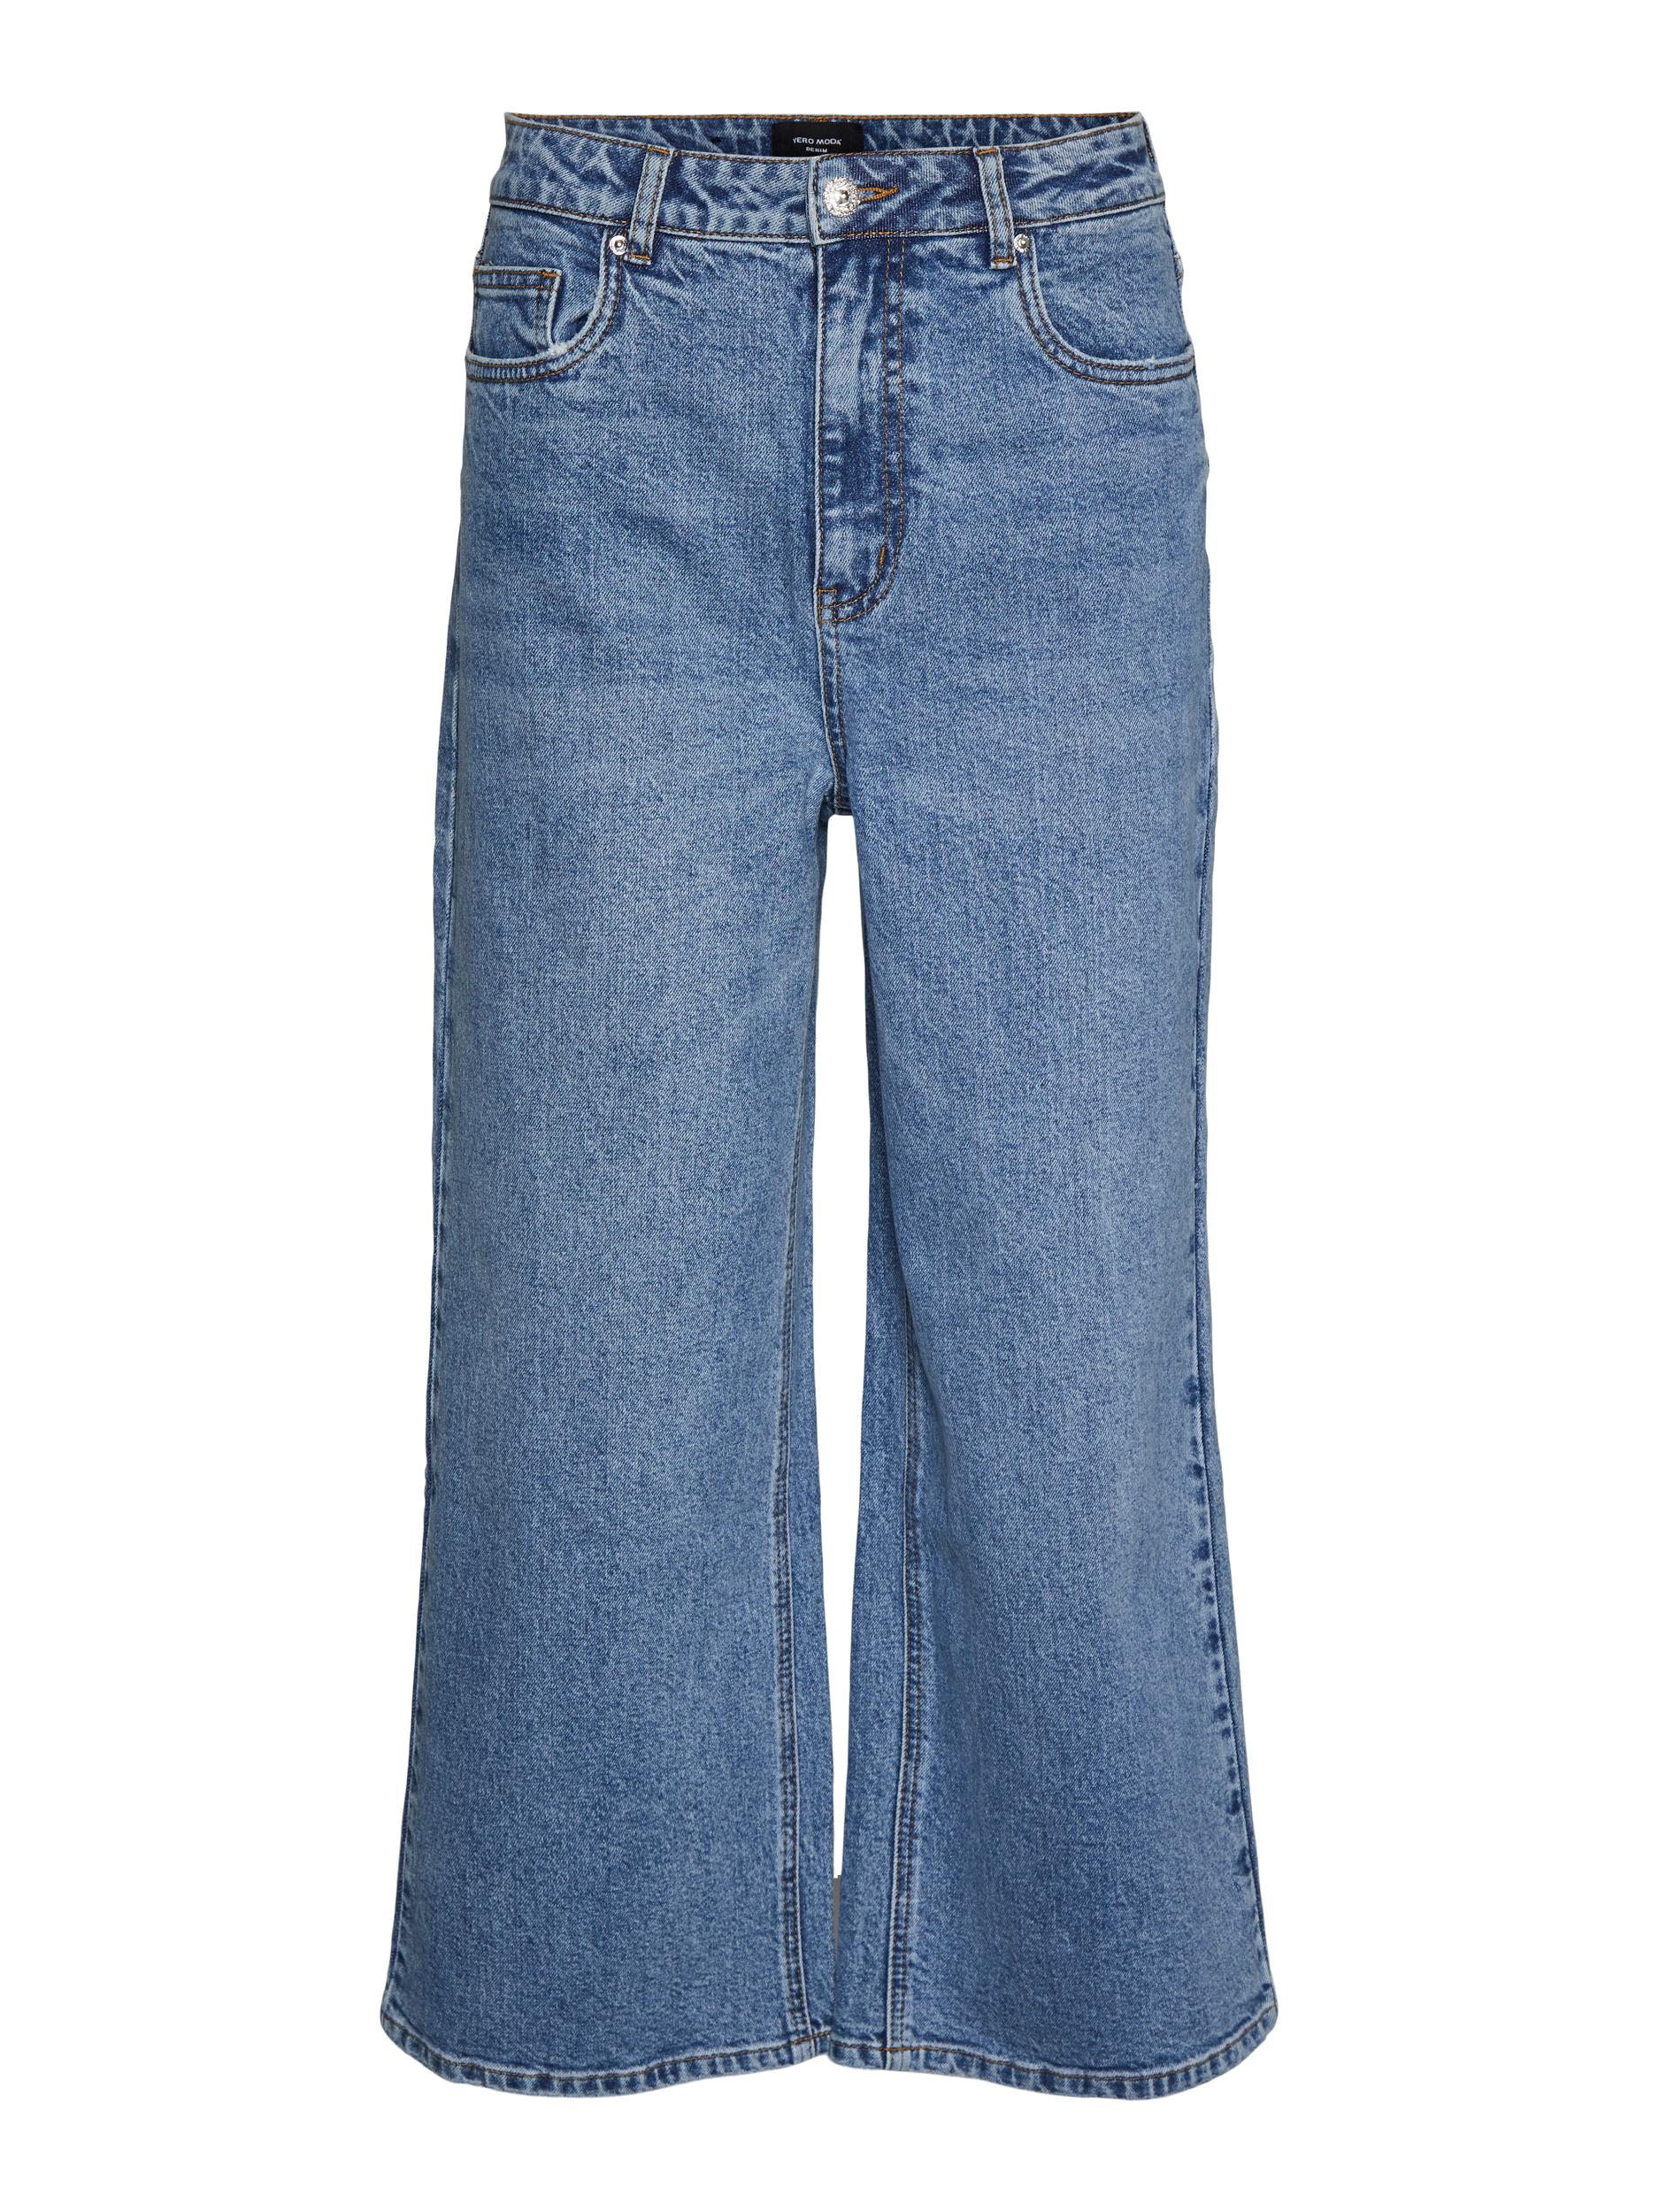 Vero Moda Kathy Jeans, Light Blue Denim, W29/L34